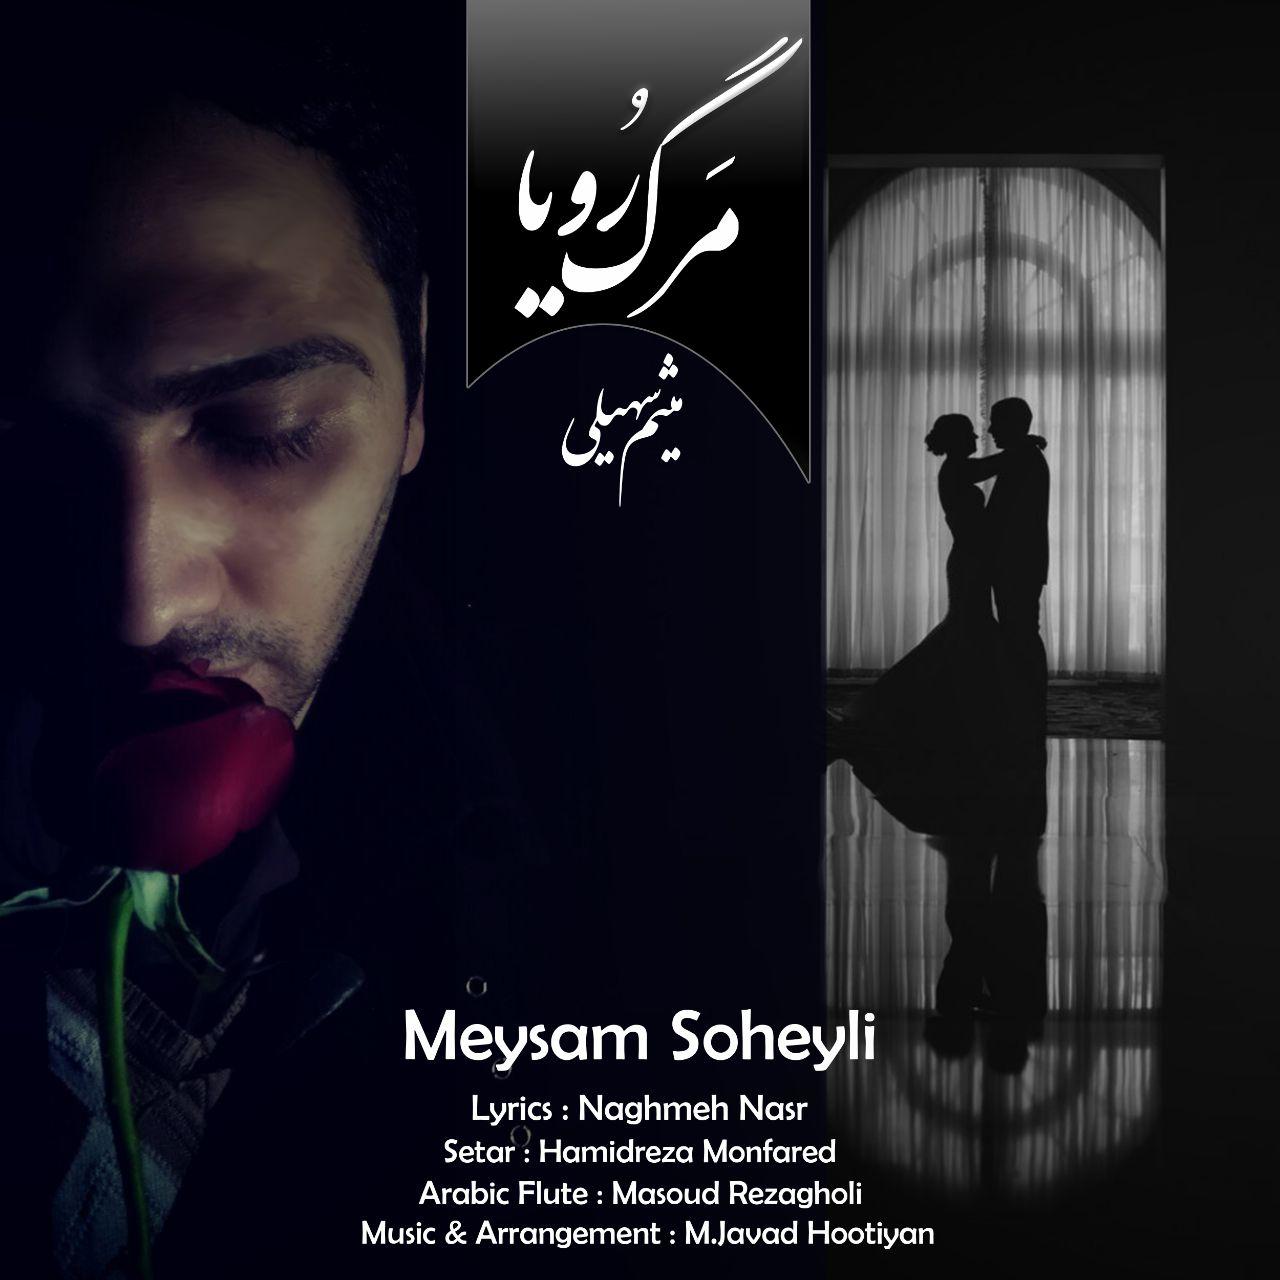  دانلود آهنگ جدید میثم سهیلی - مرگ رویا | Download New Music By Meysam Soheyli - Marge Roya